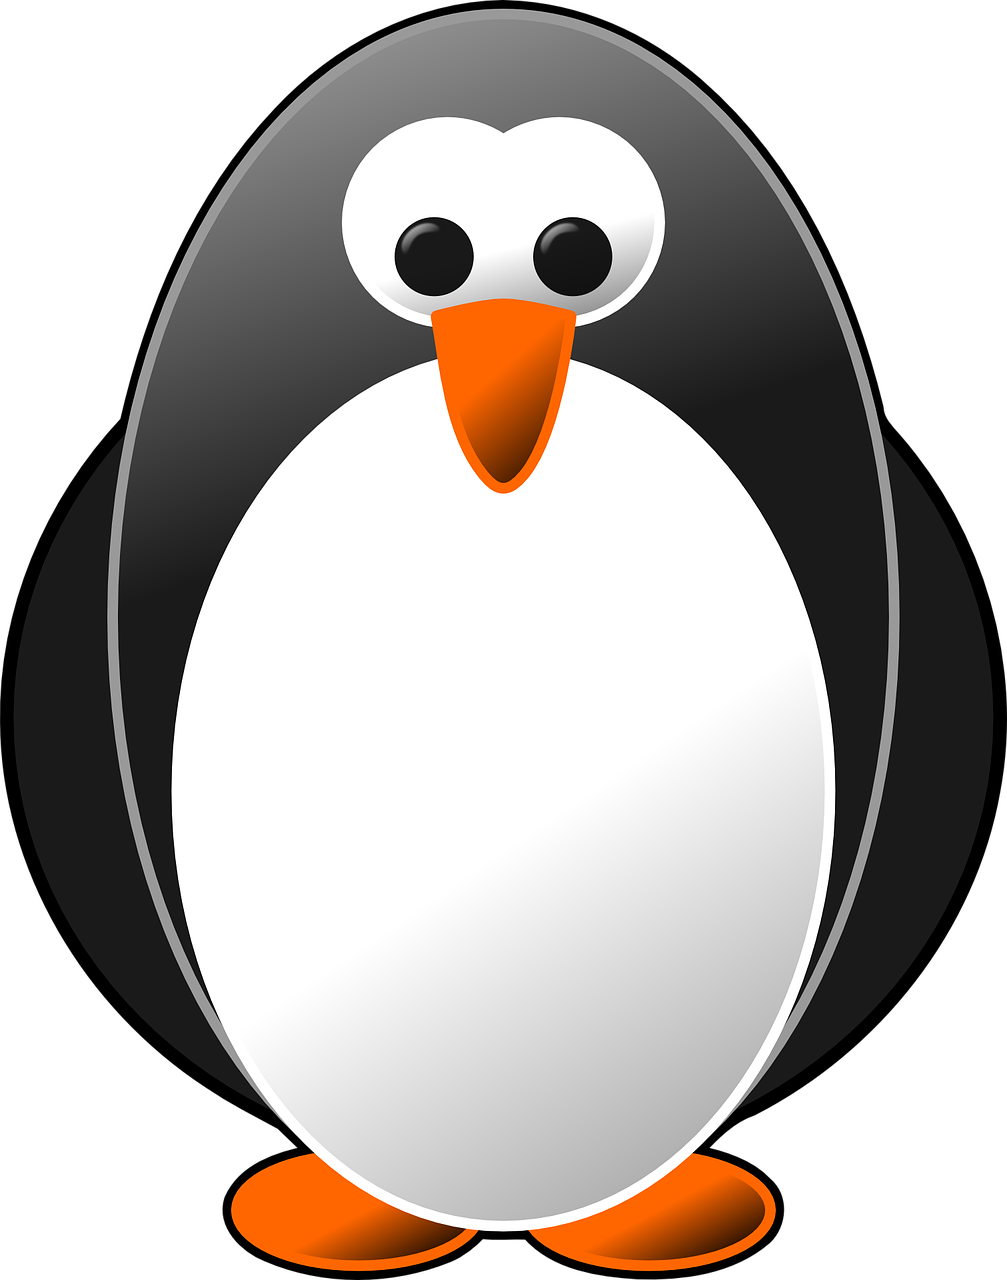 Linux Mascot Cartoon Penguin